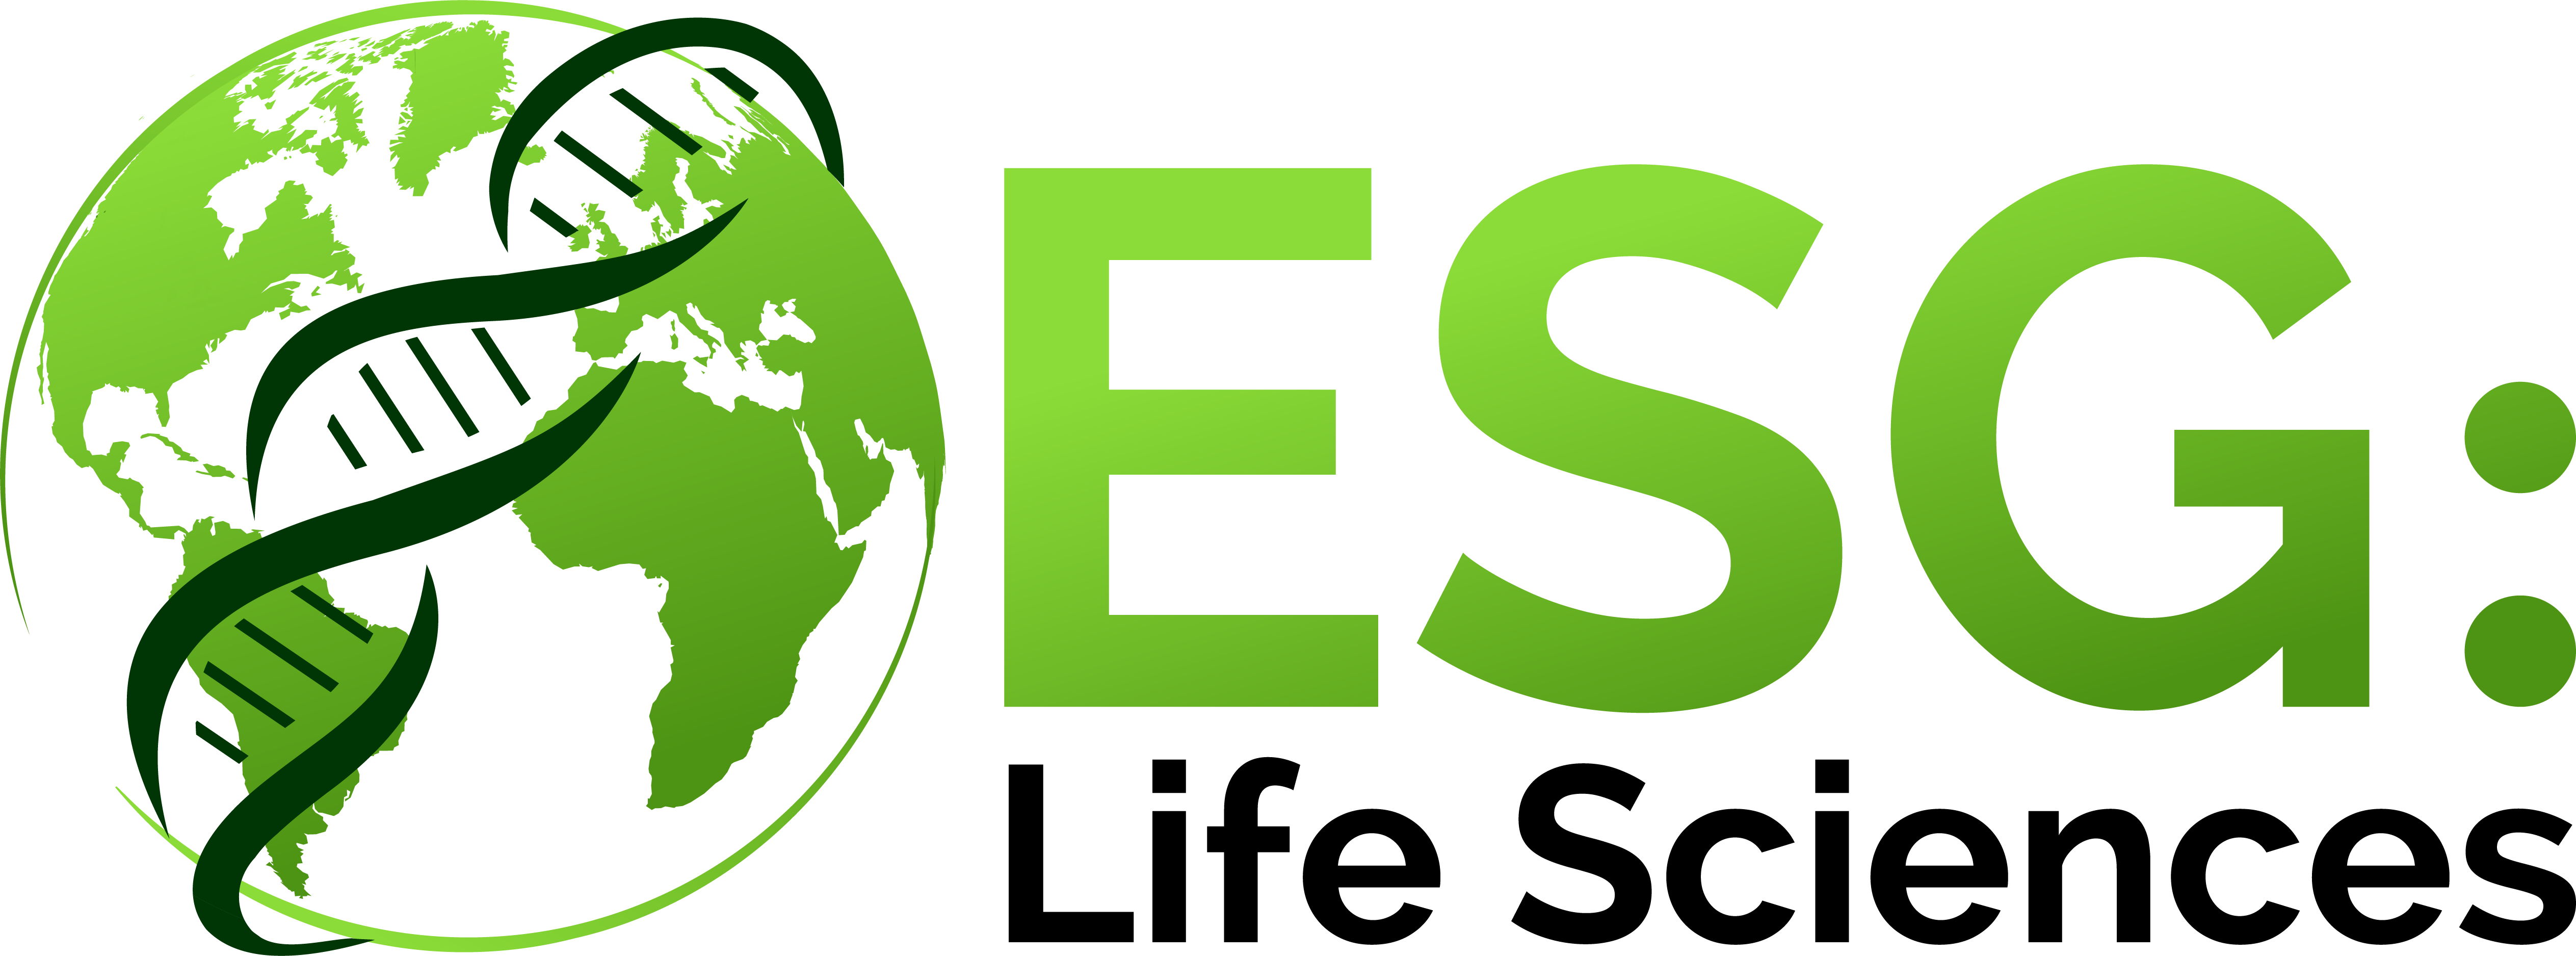 HW220621 29884 ESG in Biopharma Summit logo v5